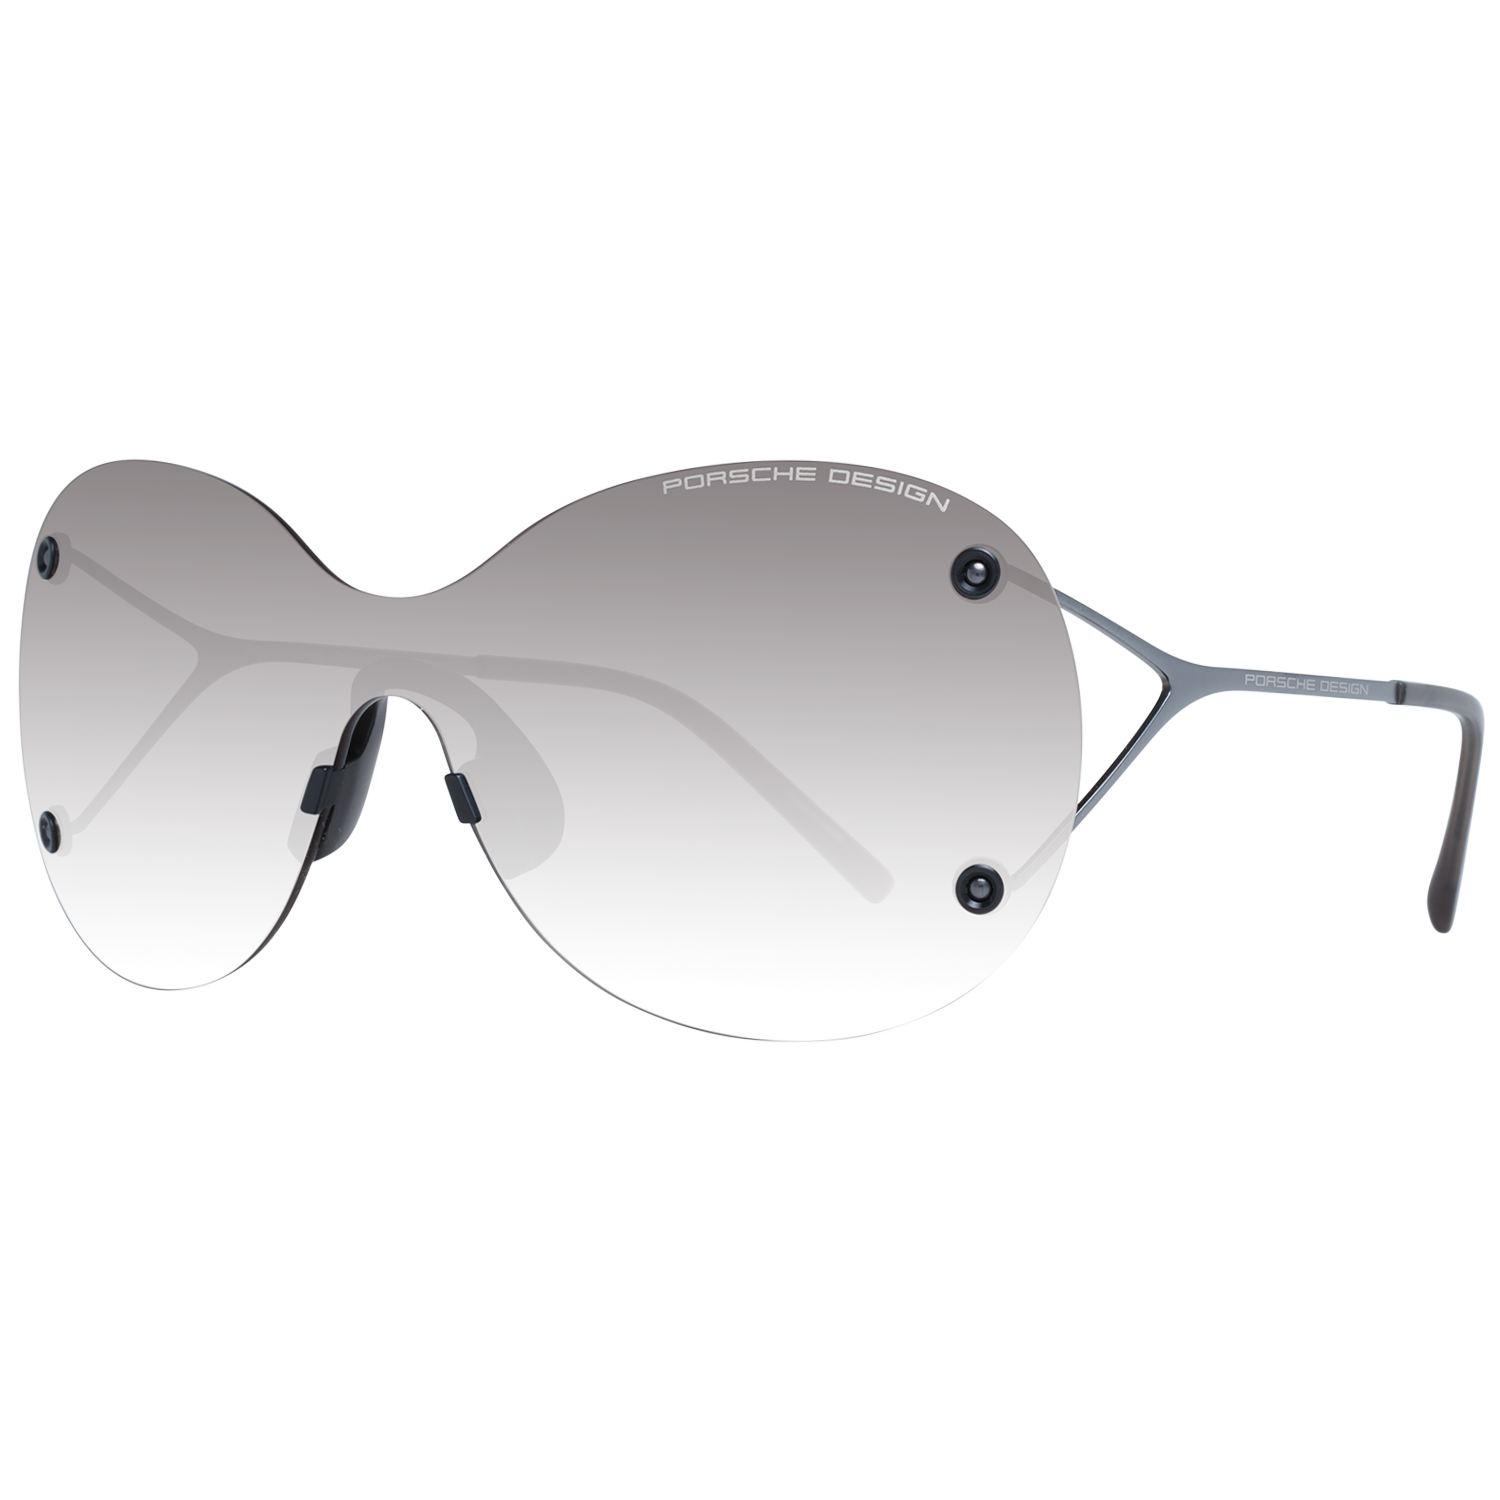 Porsche Design Sunglasses Porsche Design Sunglasses P8621 A 139 Titanium Eyeglasses Eyewear UK USA Australia 